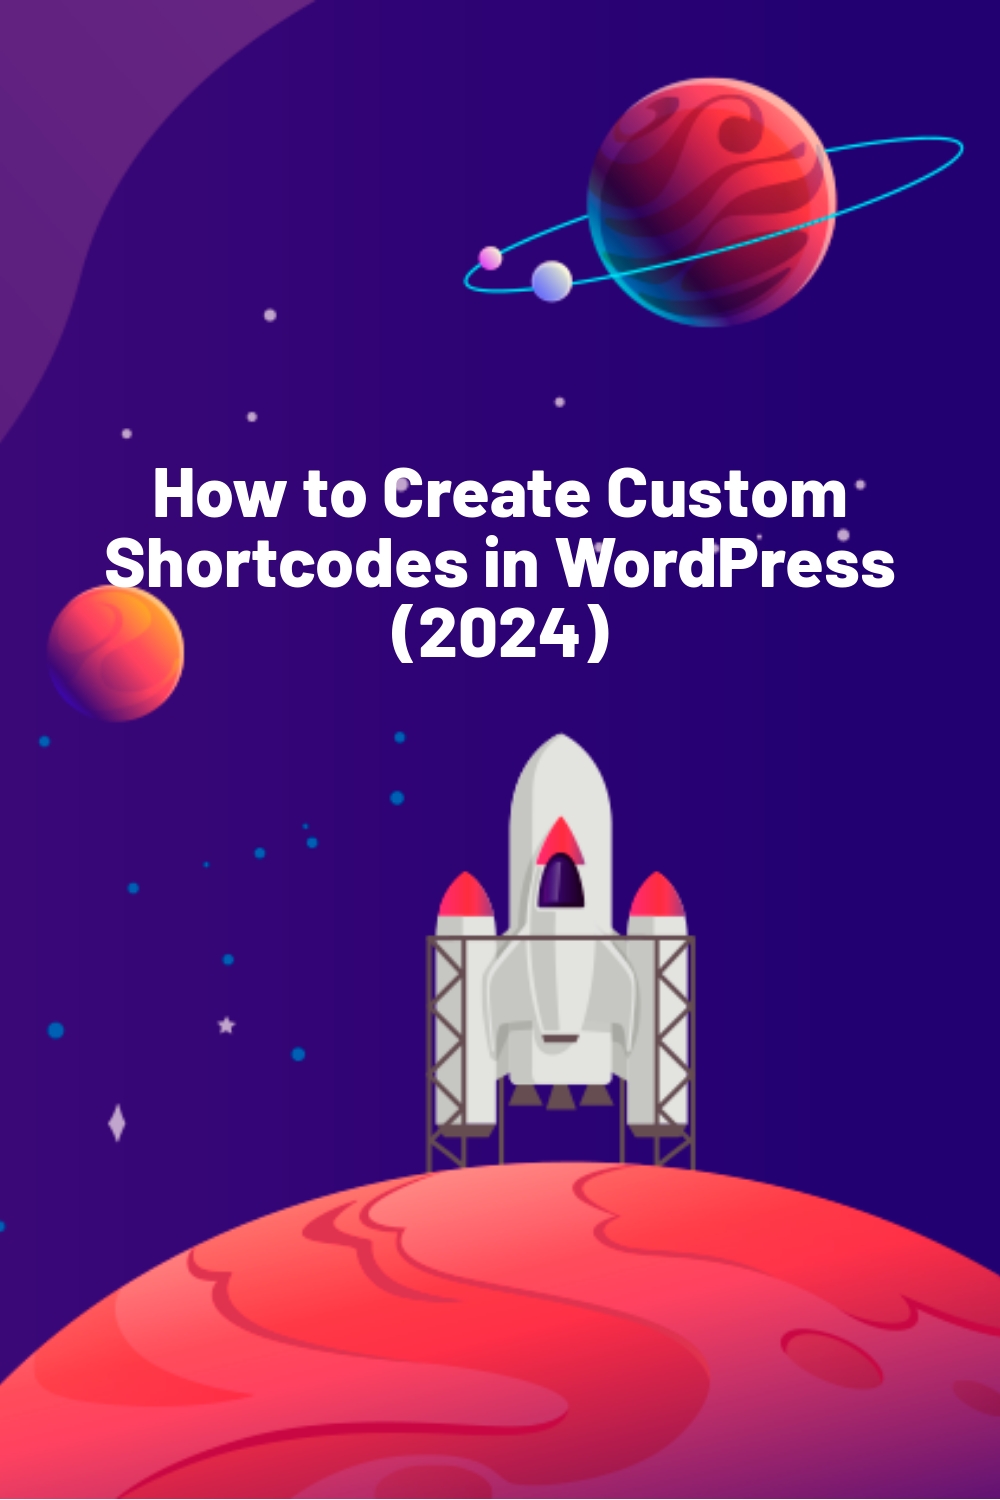 How to Create Custom Shortcodes in WordPress (2024)